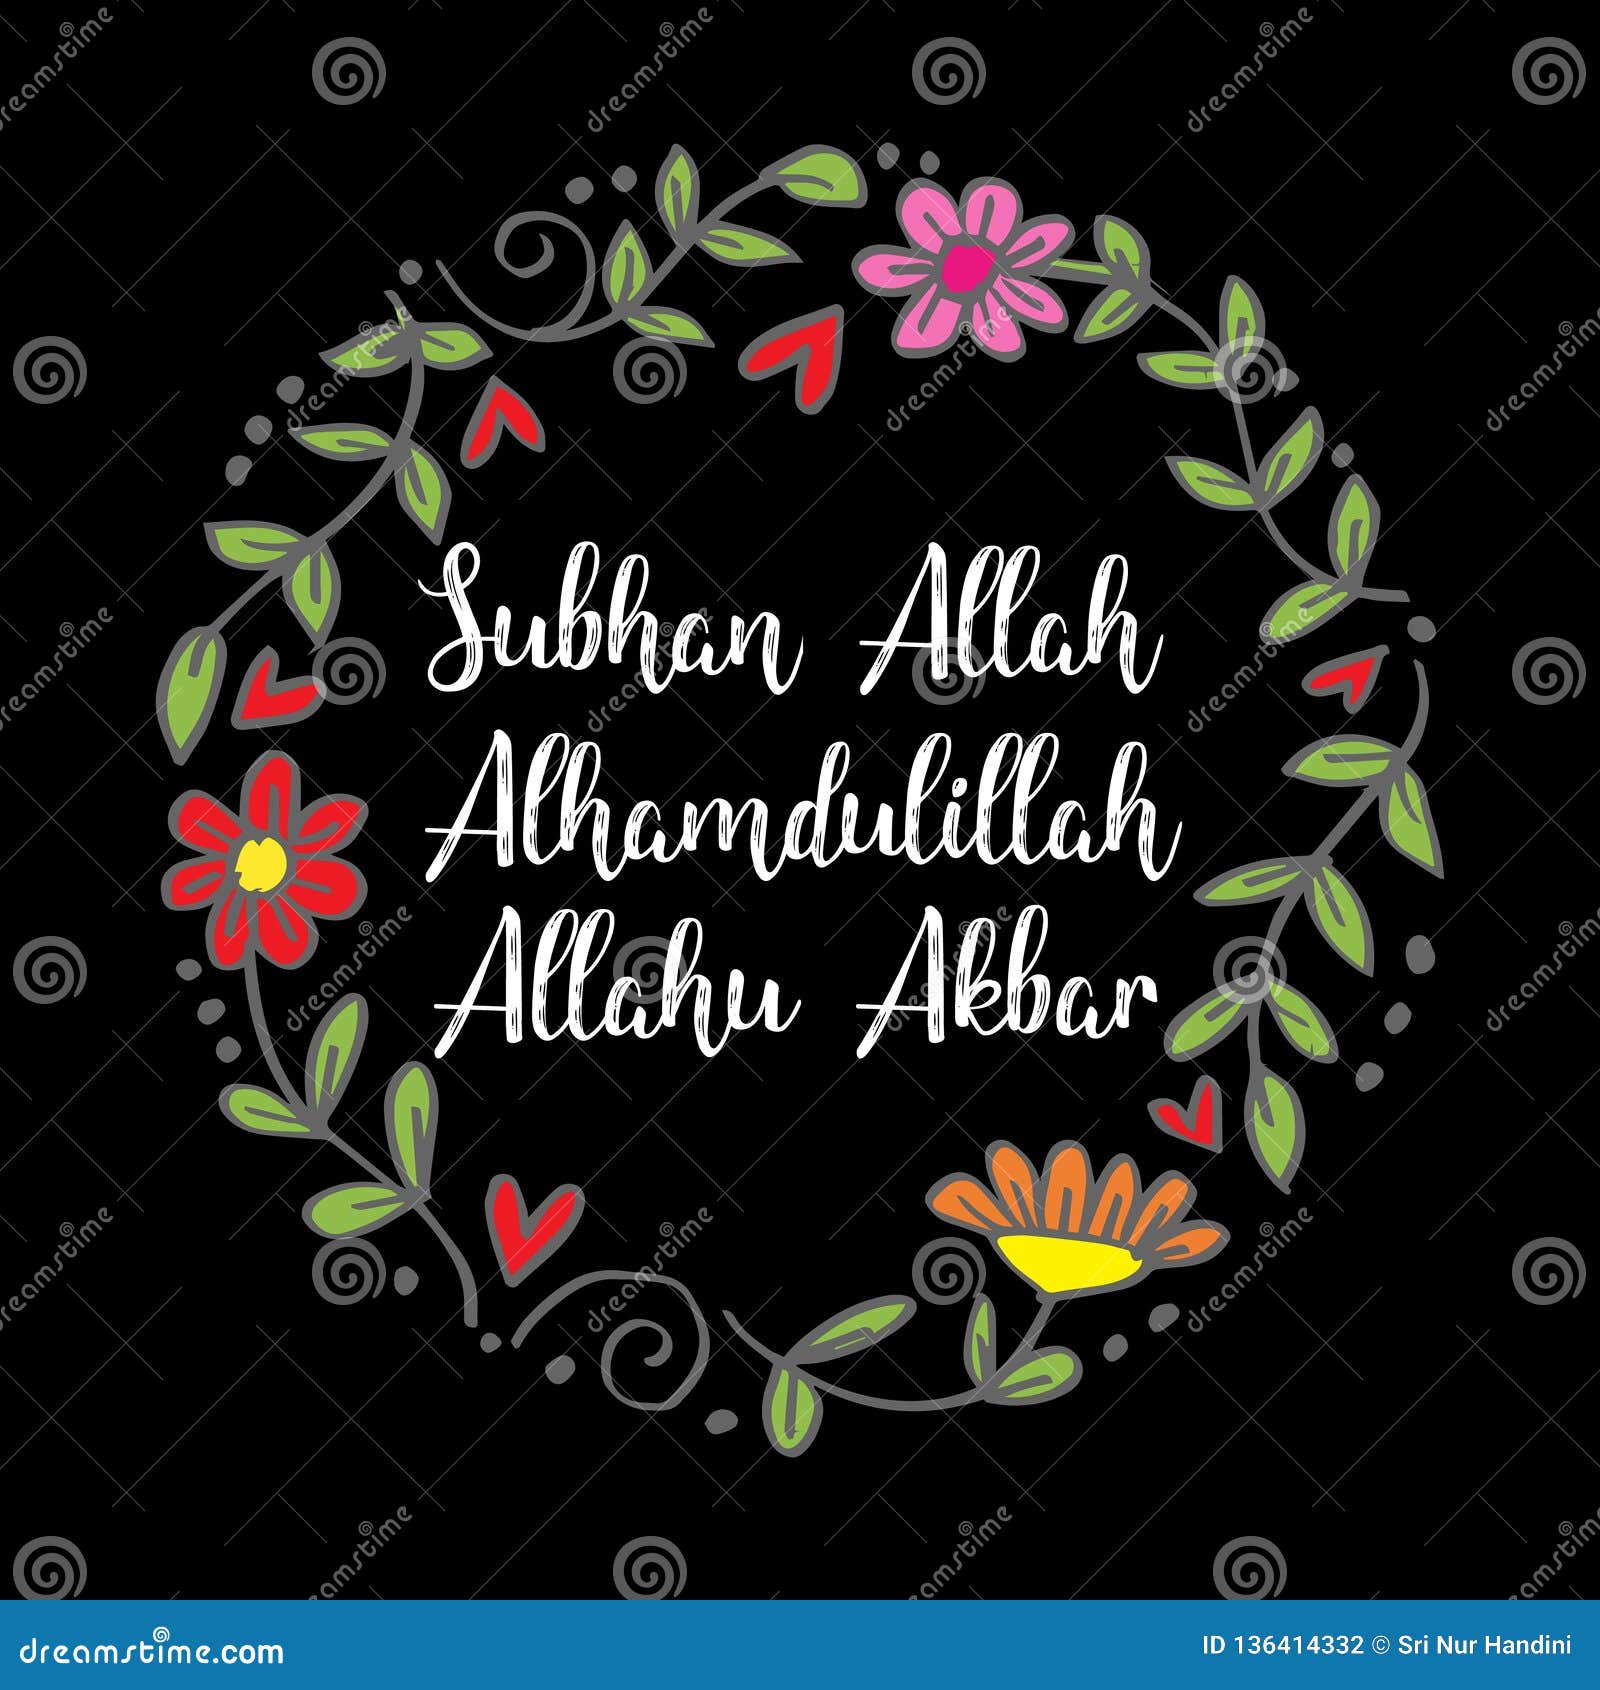 Allah hu akbar Wallpaper by DearKhan on DeviantArt